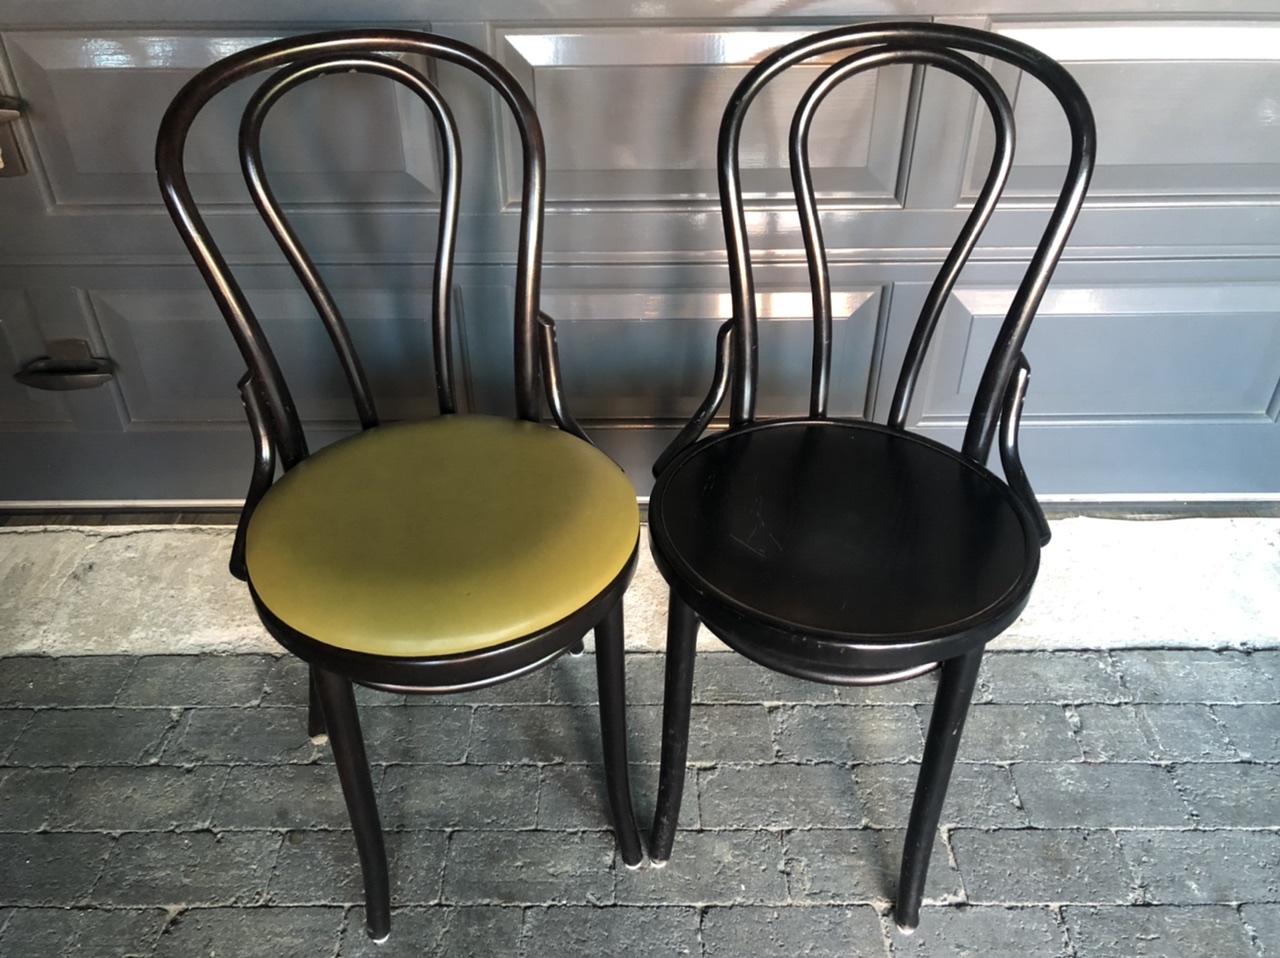 Thonet bentwood no 18 model de parel holland chairs cafe bar bistro horeca restaurant kroeg cafe stoelen